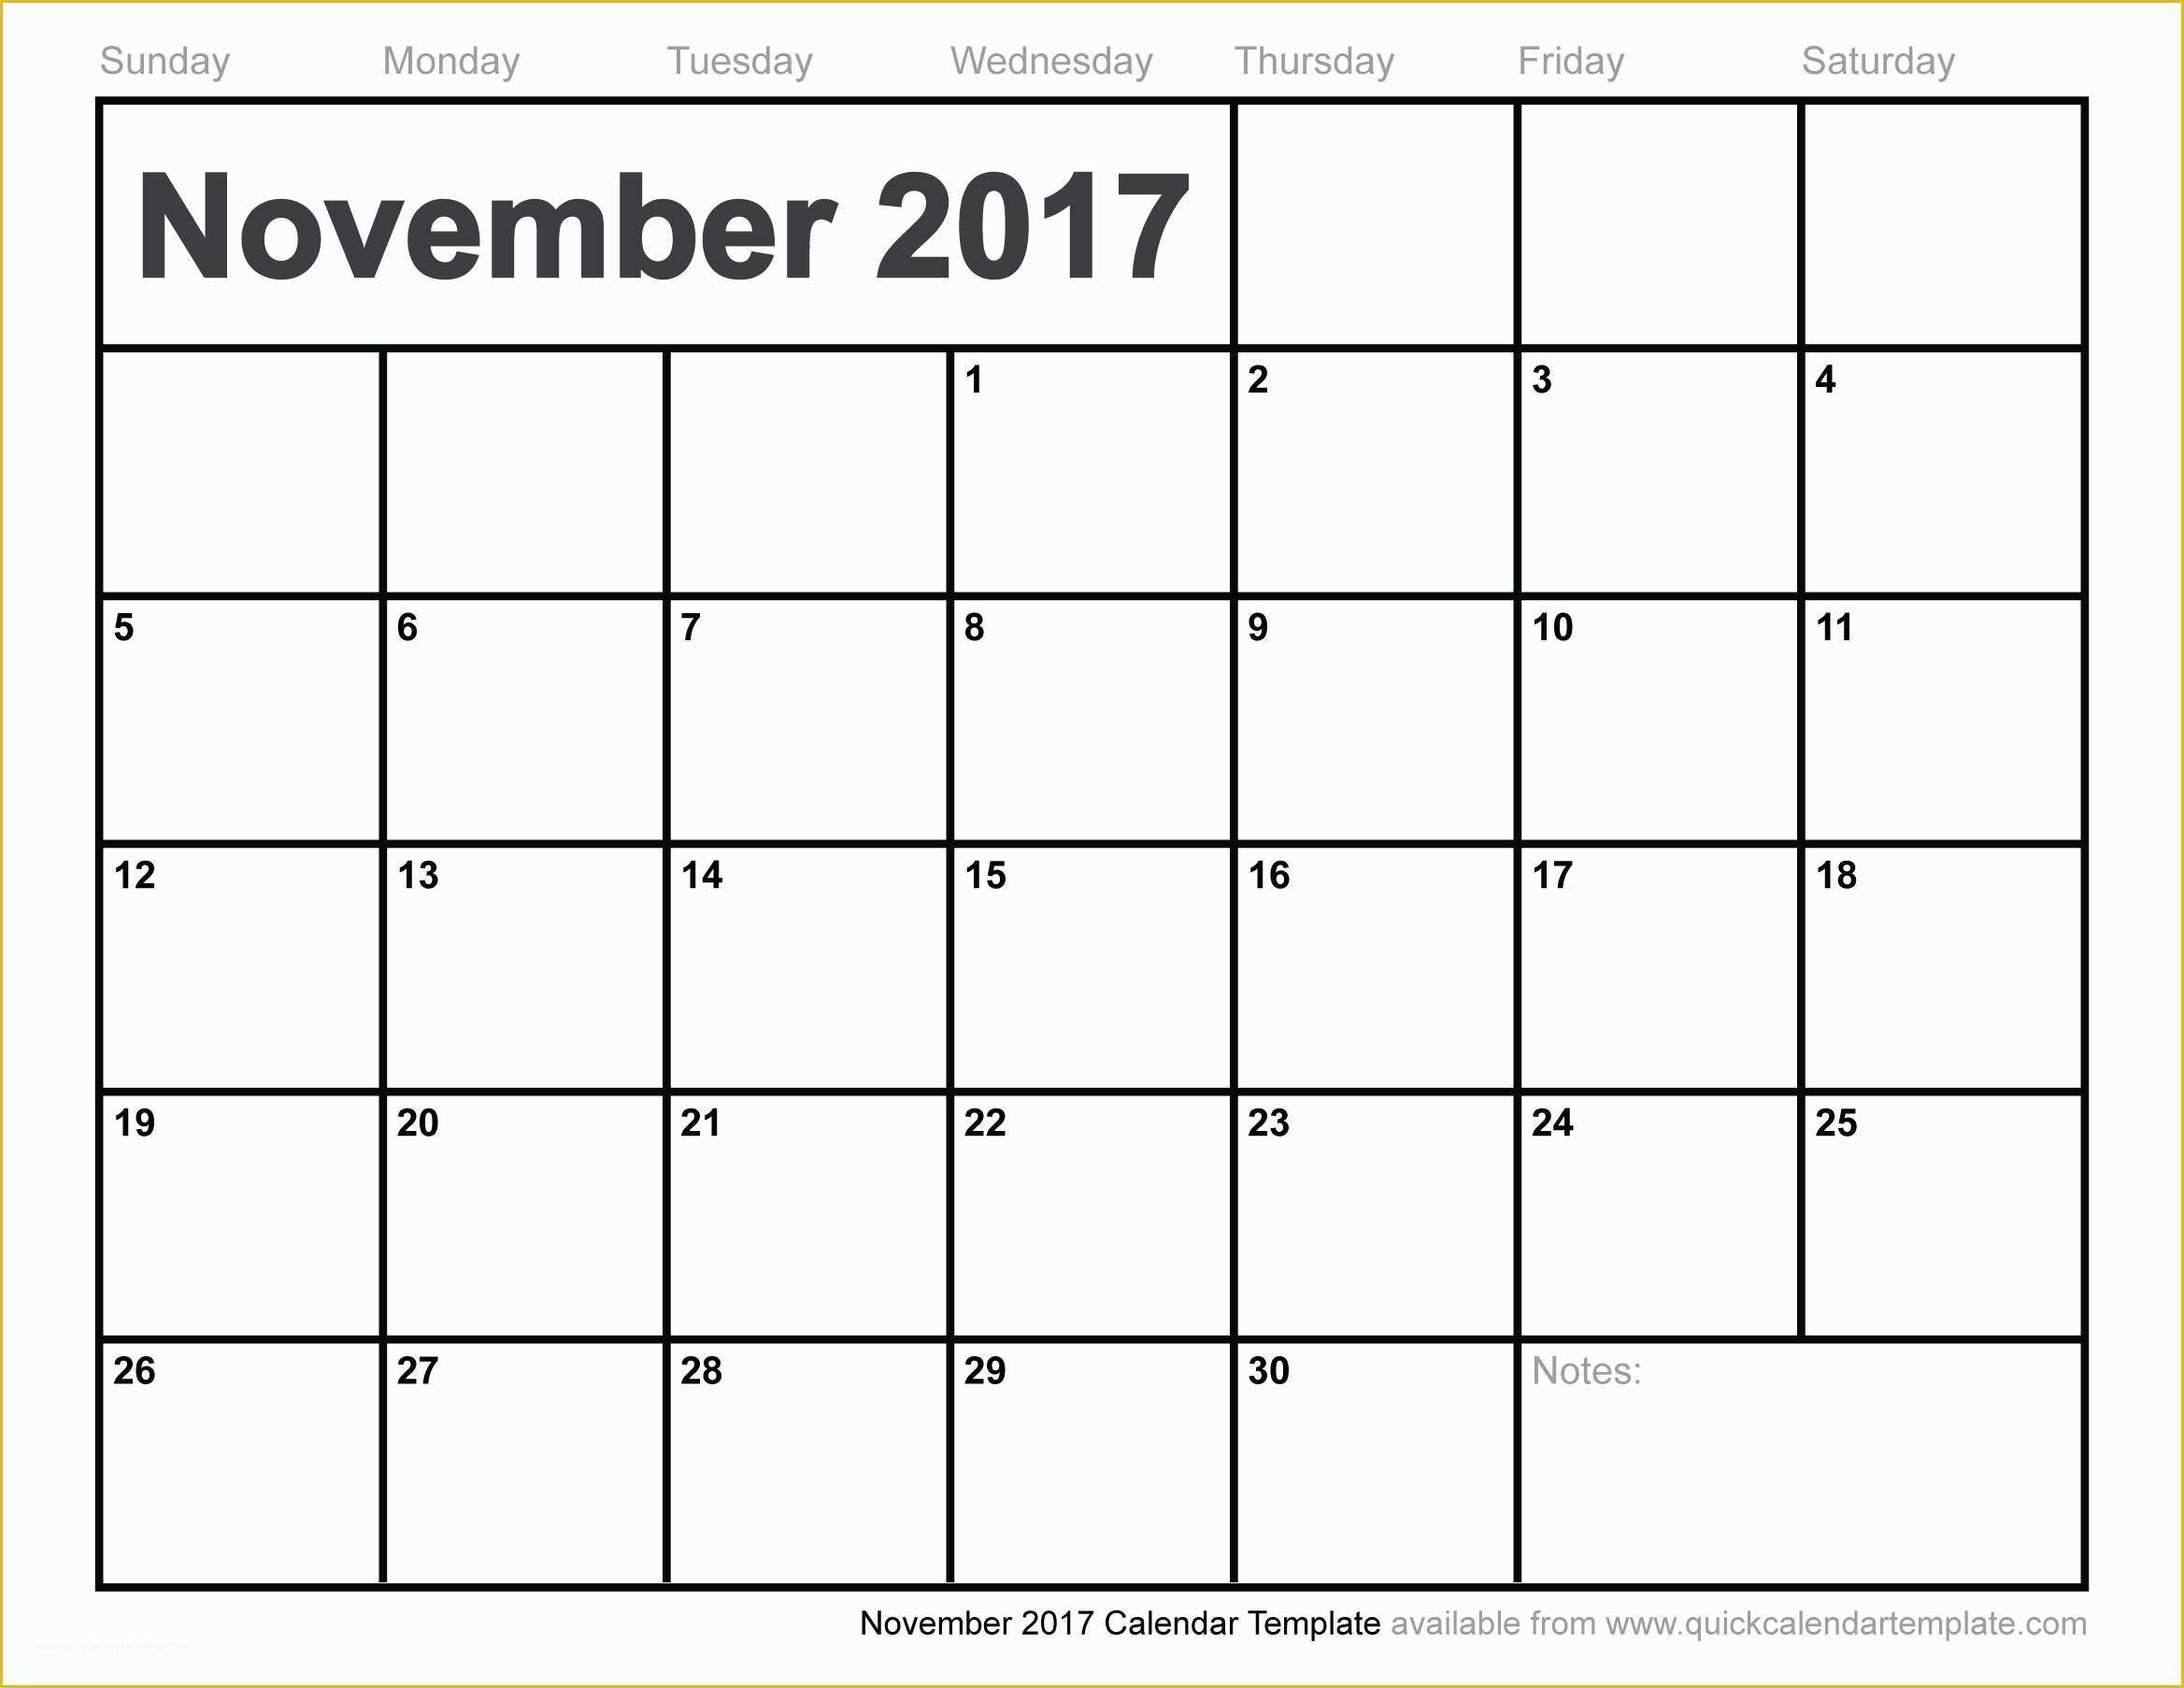 Free Calendar Template 2017 November Of November 2017 Calendar Template December 2017 Calendar